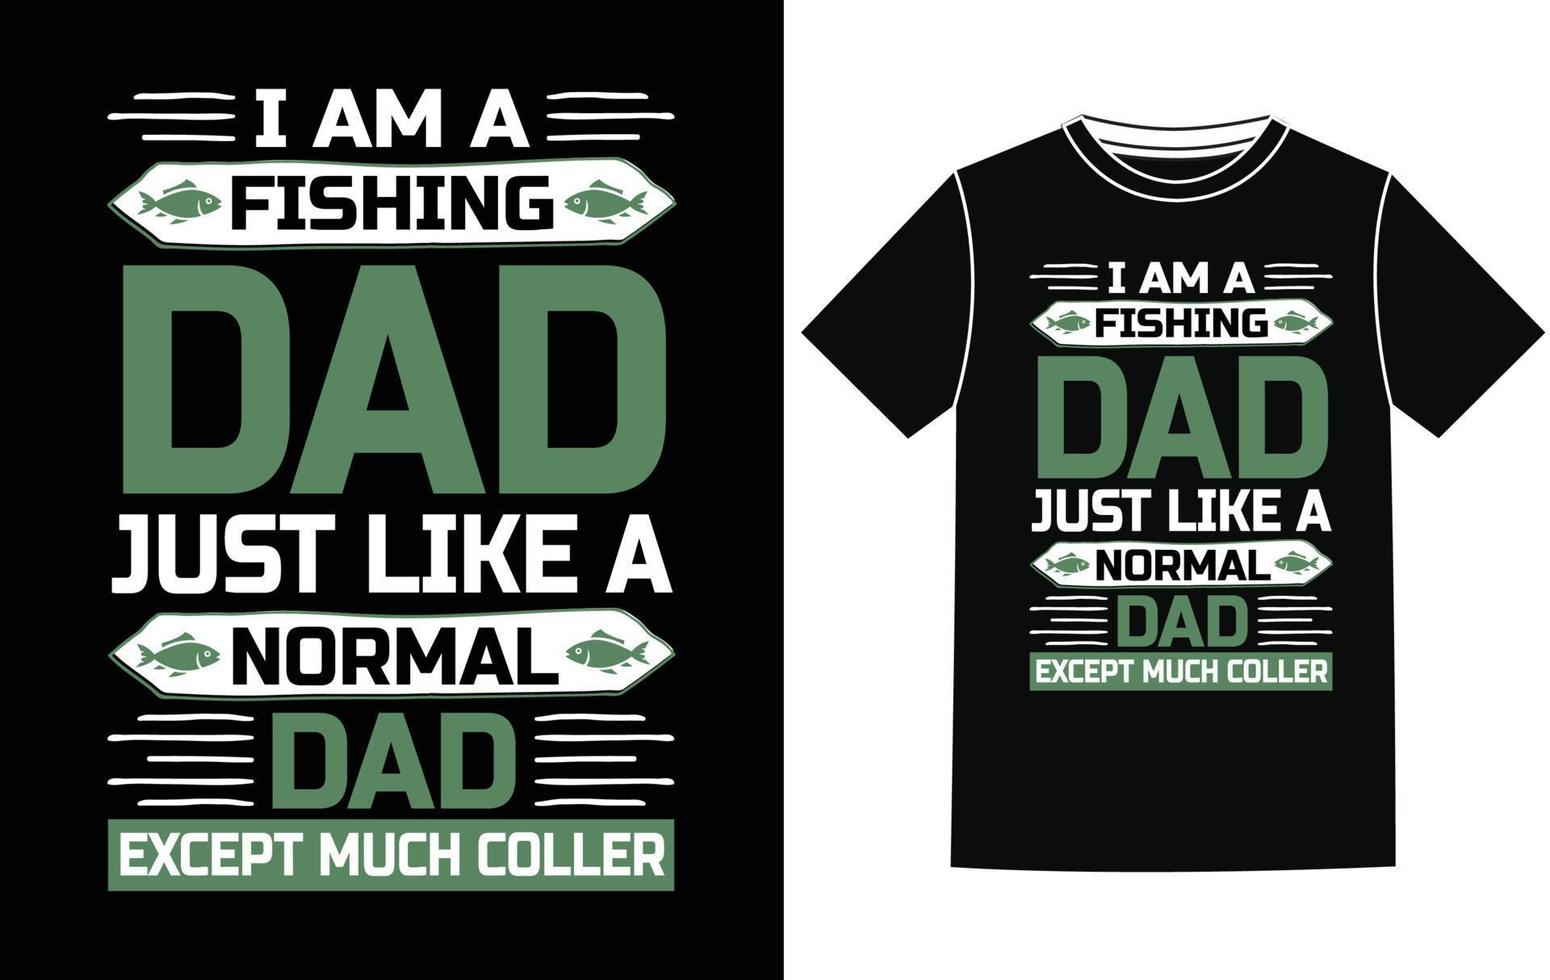 Fishing T-shirt design vector